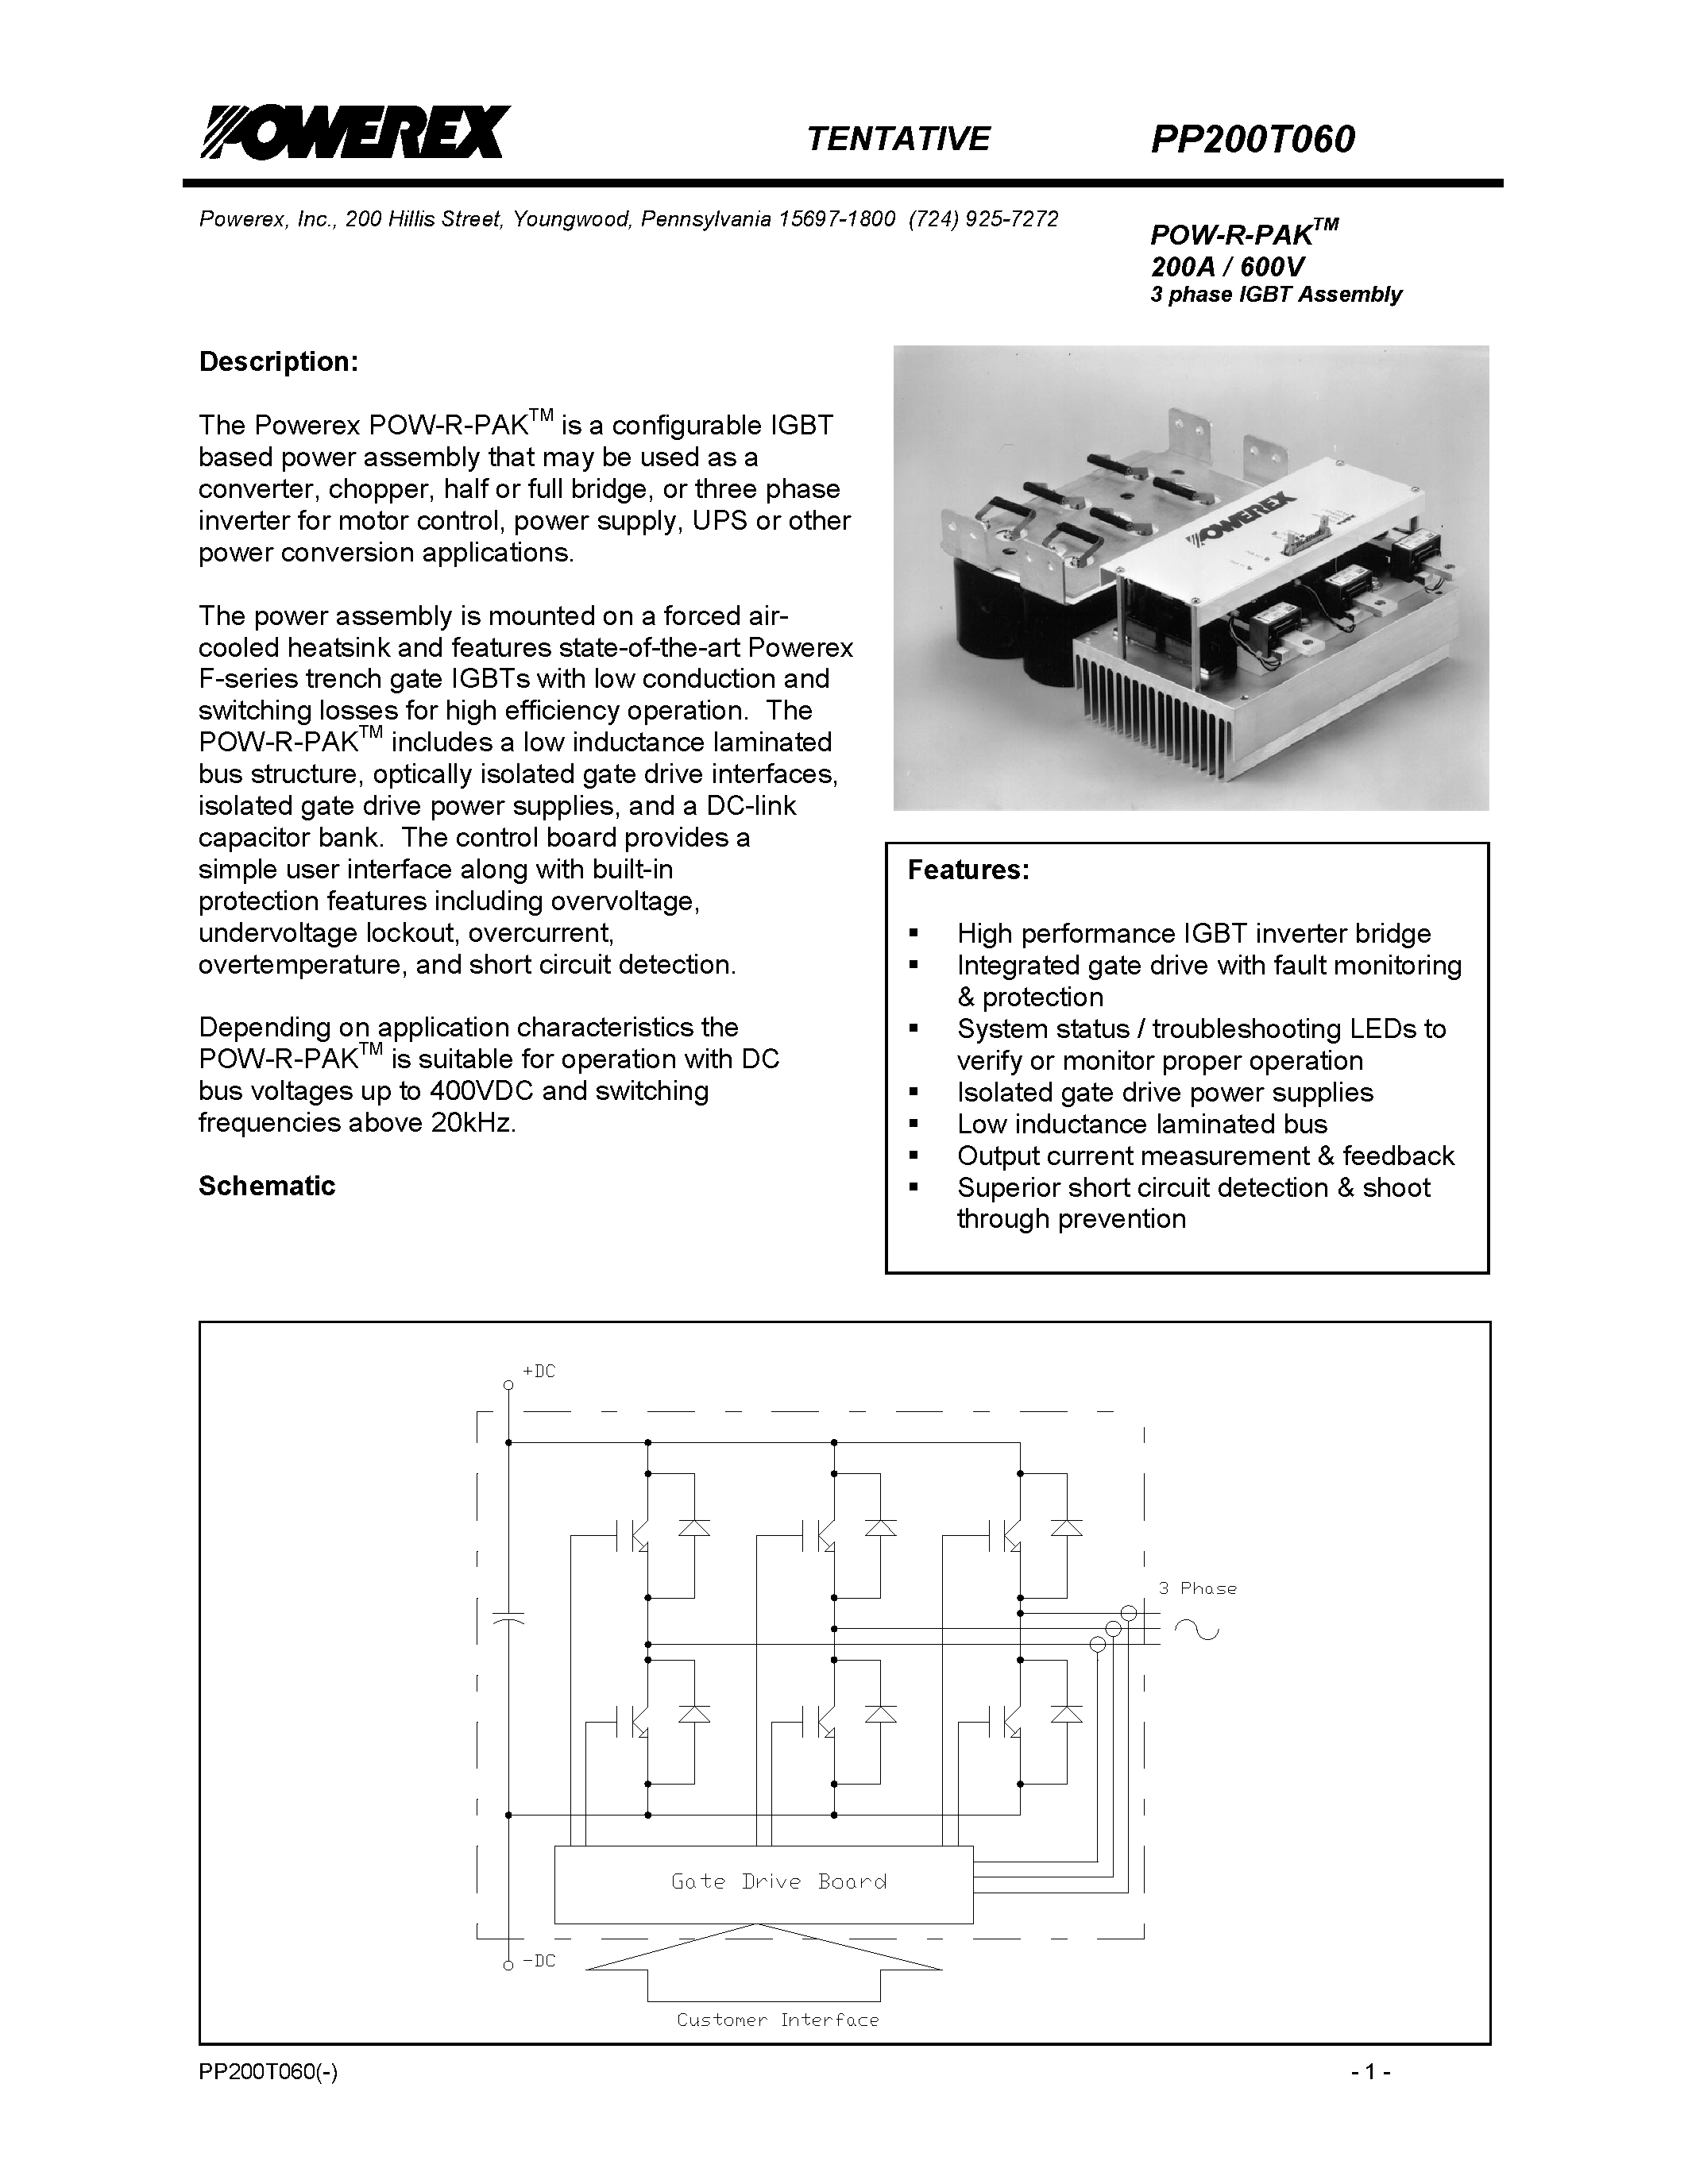 Datasheet PP200T060 - POW-R-PAK 200A / 600V 3 phase IGBT Assembly page 1